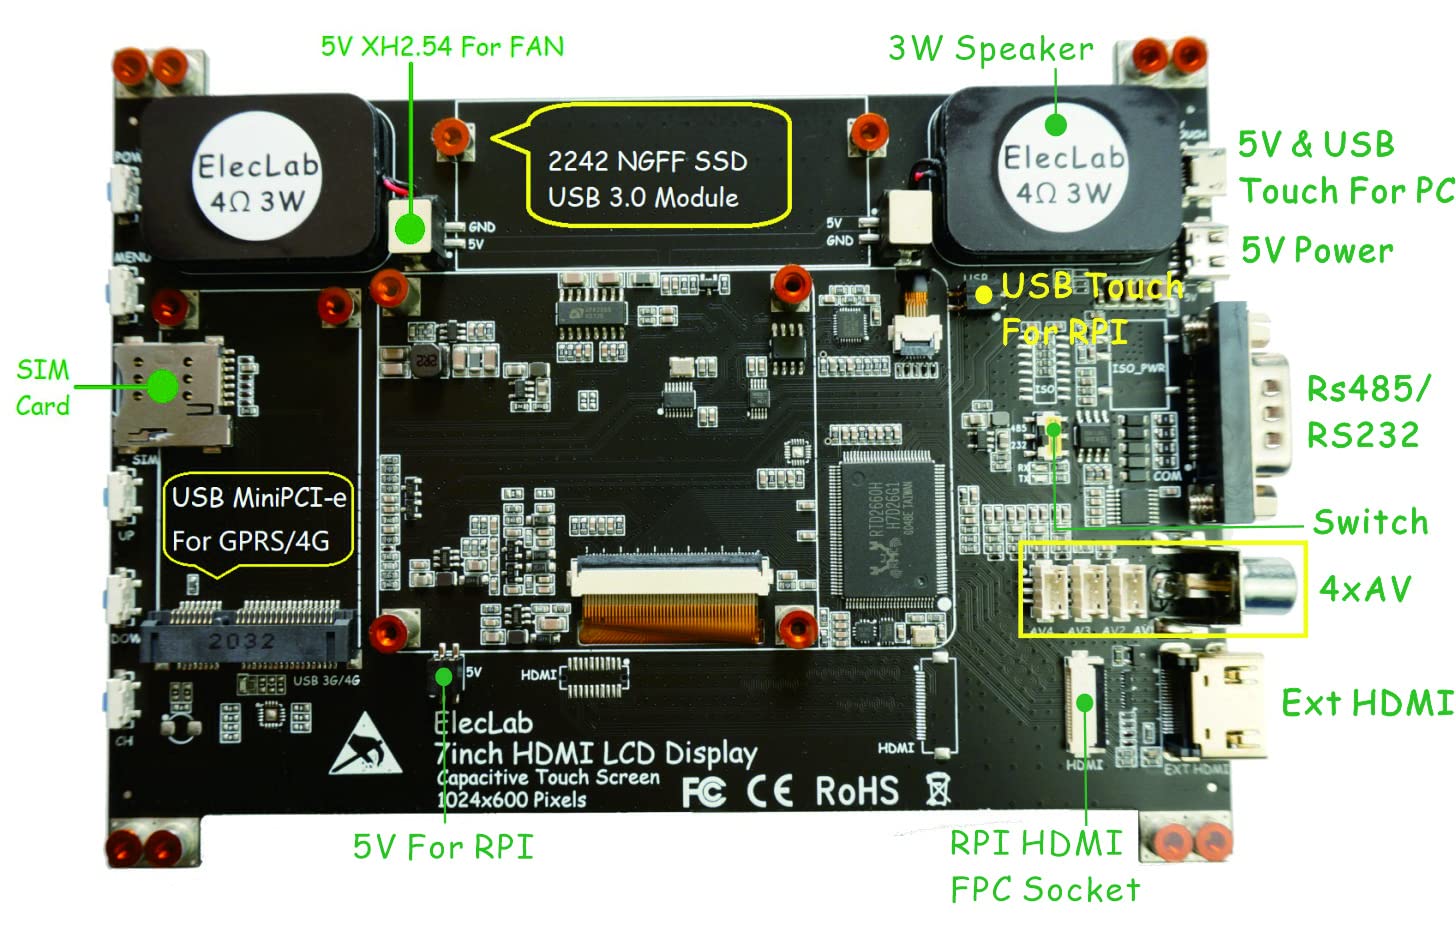 ElecLab Touchscreen Monitor 7 Inch HDMI Capacitive LCD Display 1024x600 RS232/RS485 Speaker Bracket for RPI 4B 3B+ 3B 3A+ 2B B+ …